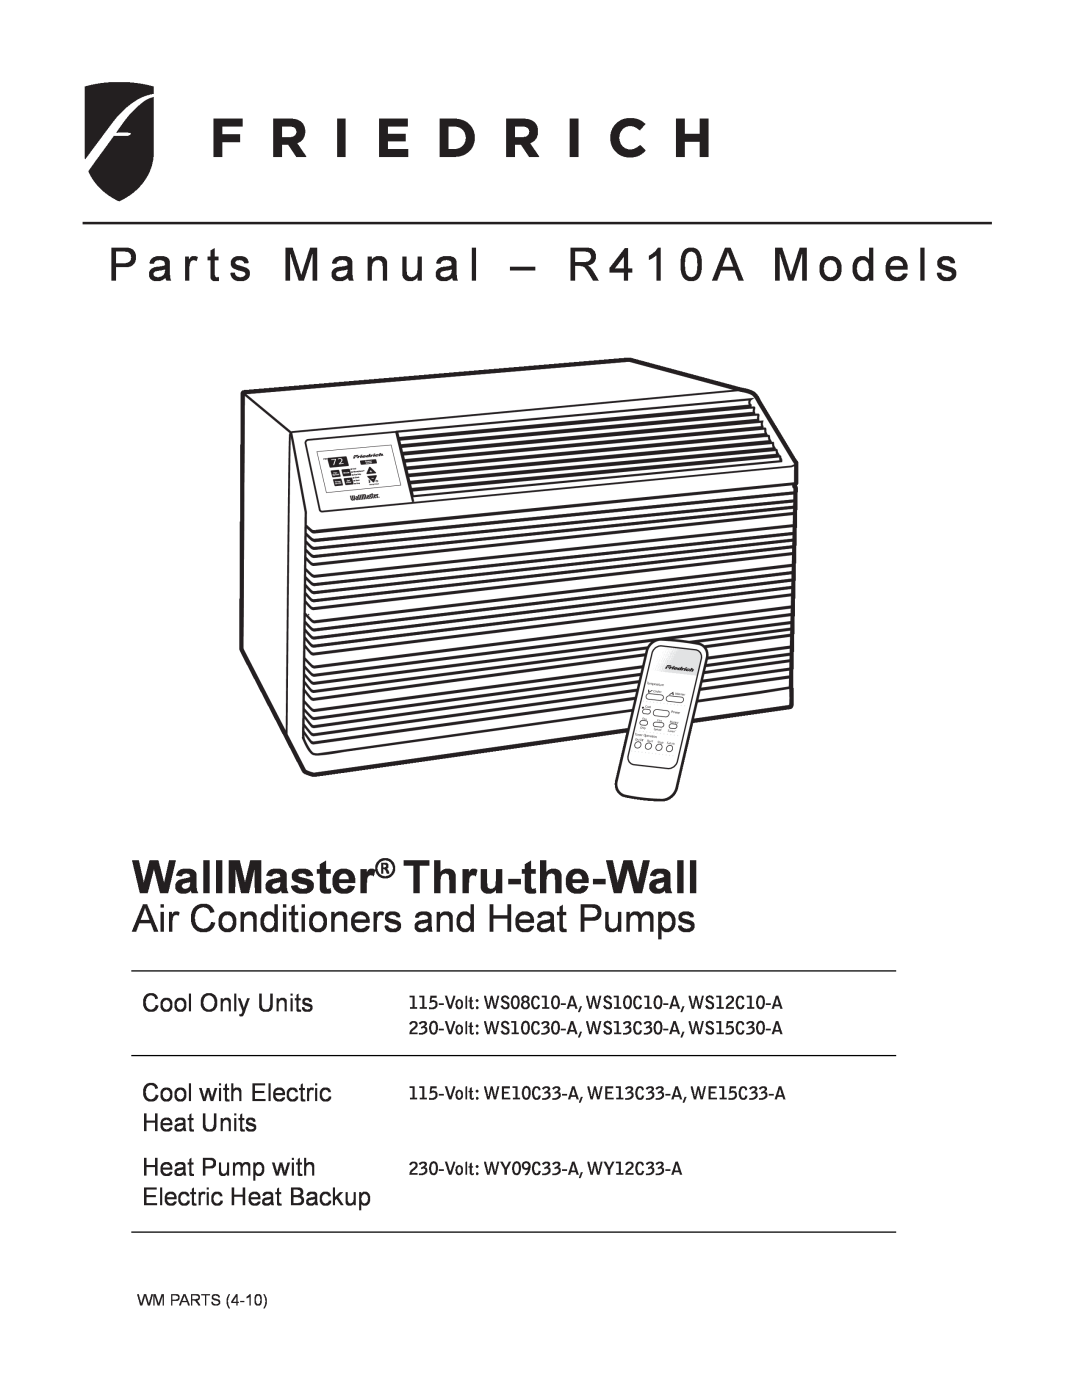 Friedrich manual Single Package Vertical Air Conditioning System, L-BSufﬁ x, R410A Models, 9-18K24K, VE, HA09K25L 